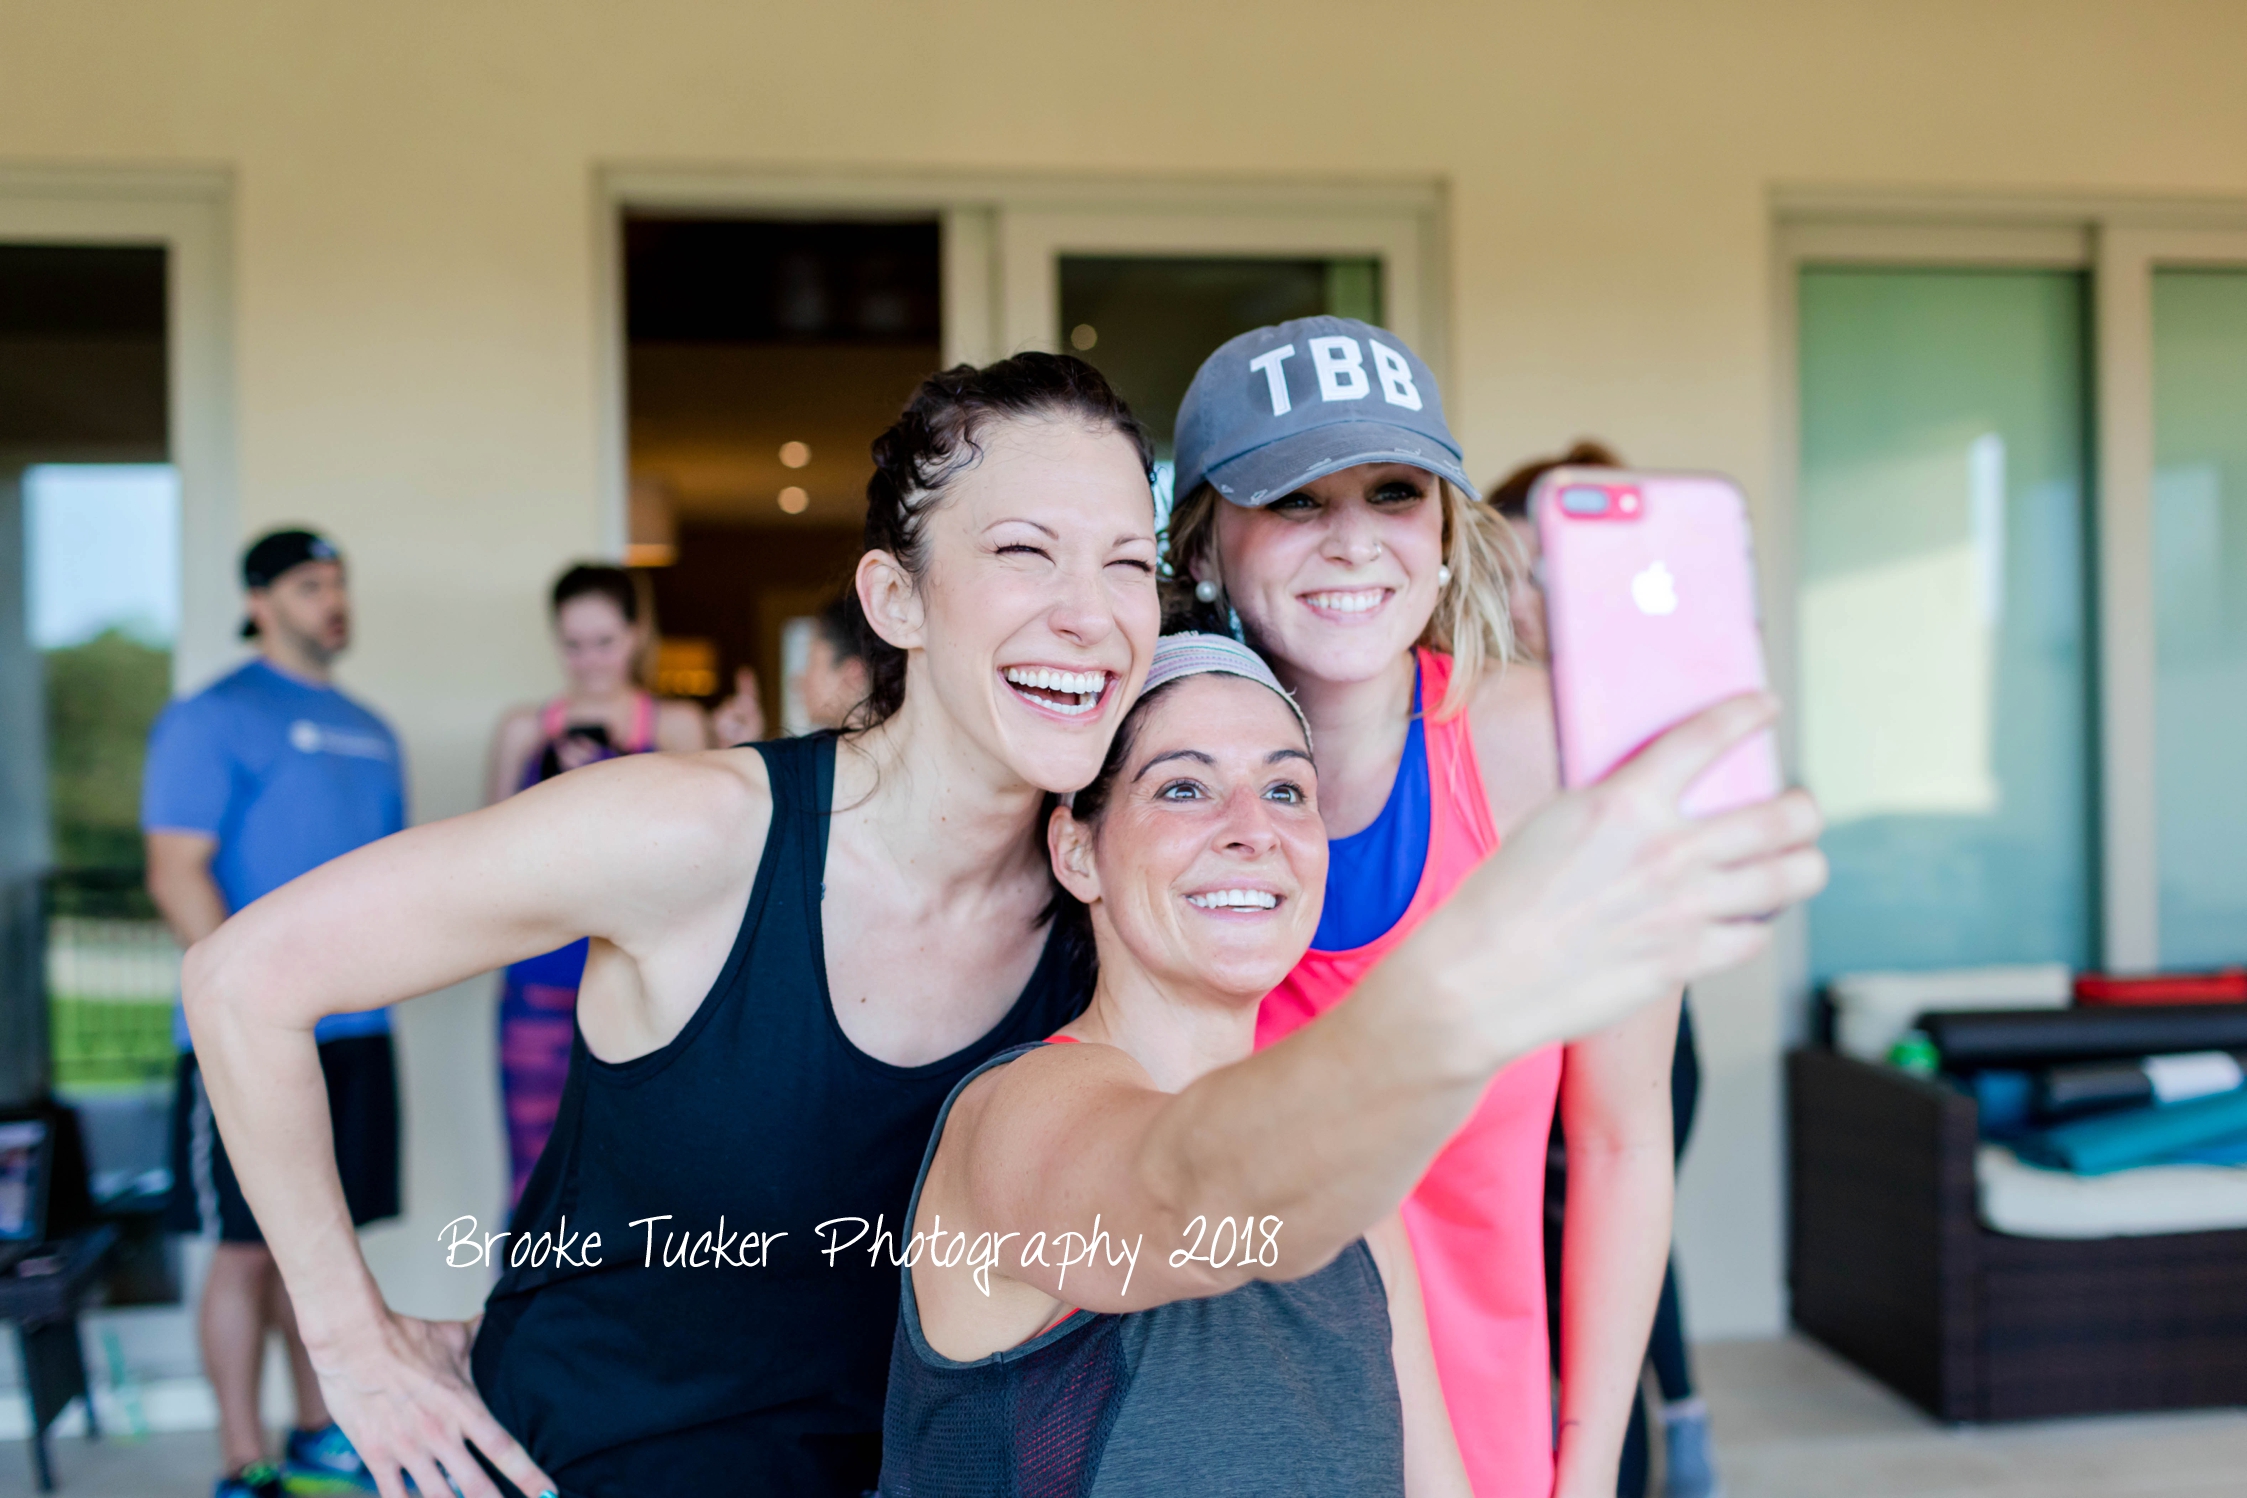 Orlando photographer brooke tucker, beach body coaches retreat weekend